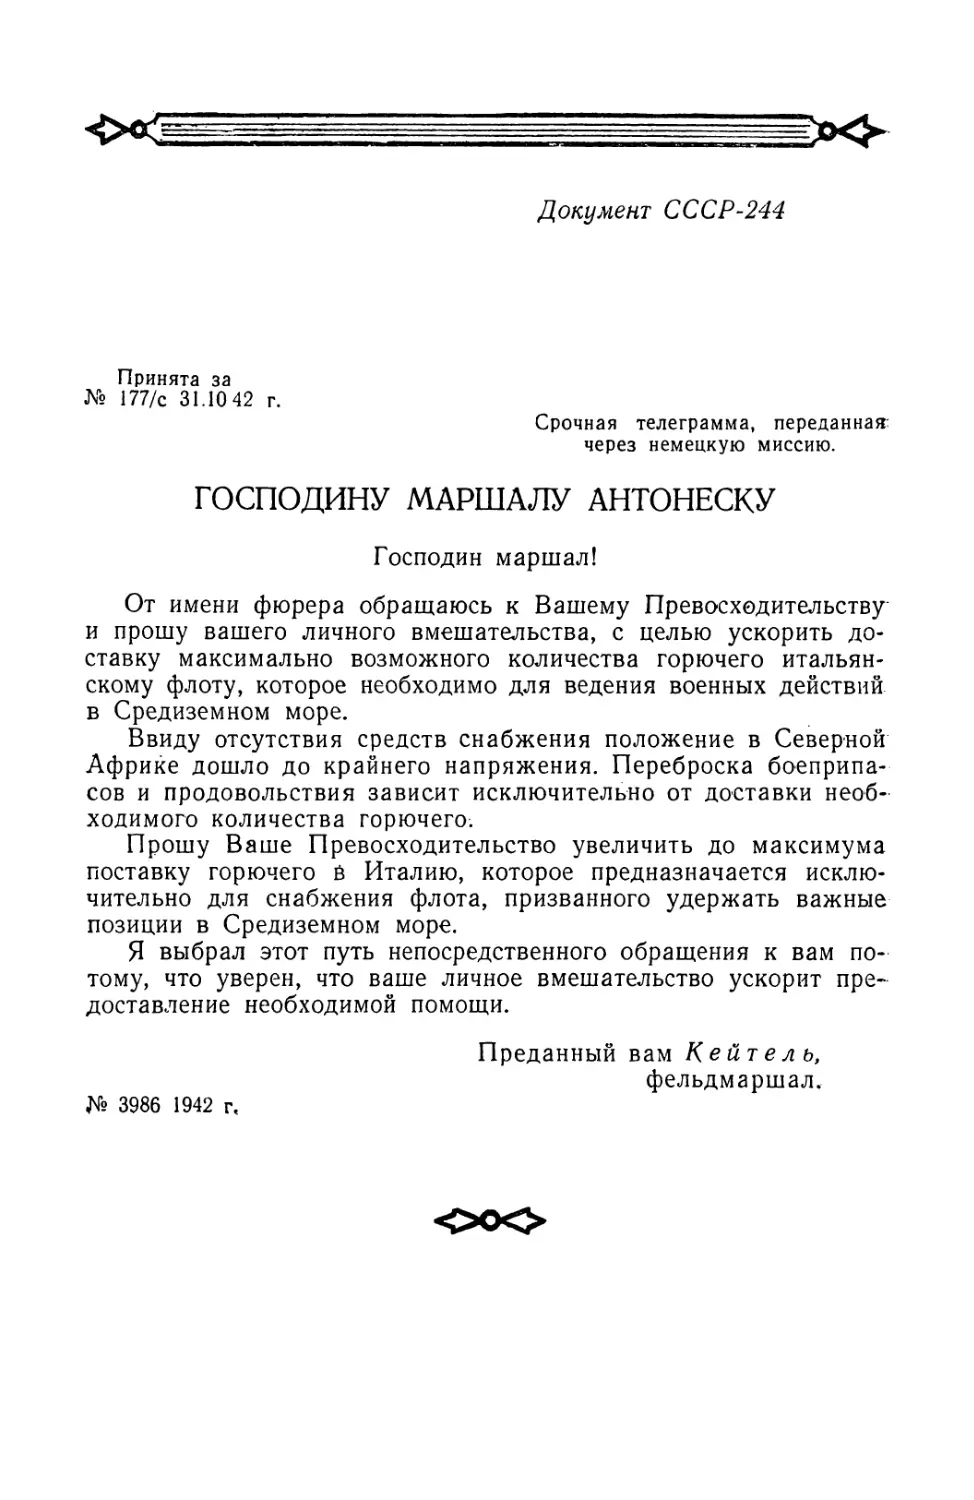 Телеграмма Кейтеля Антонеску от 31 октября 1942 г.